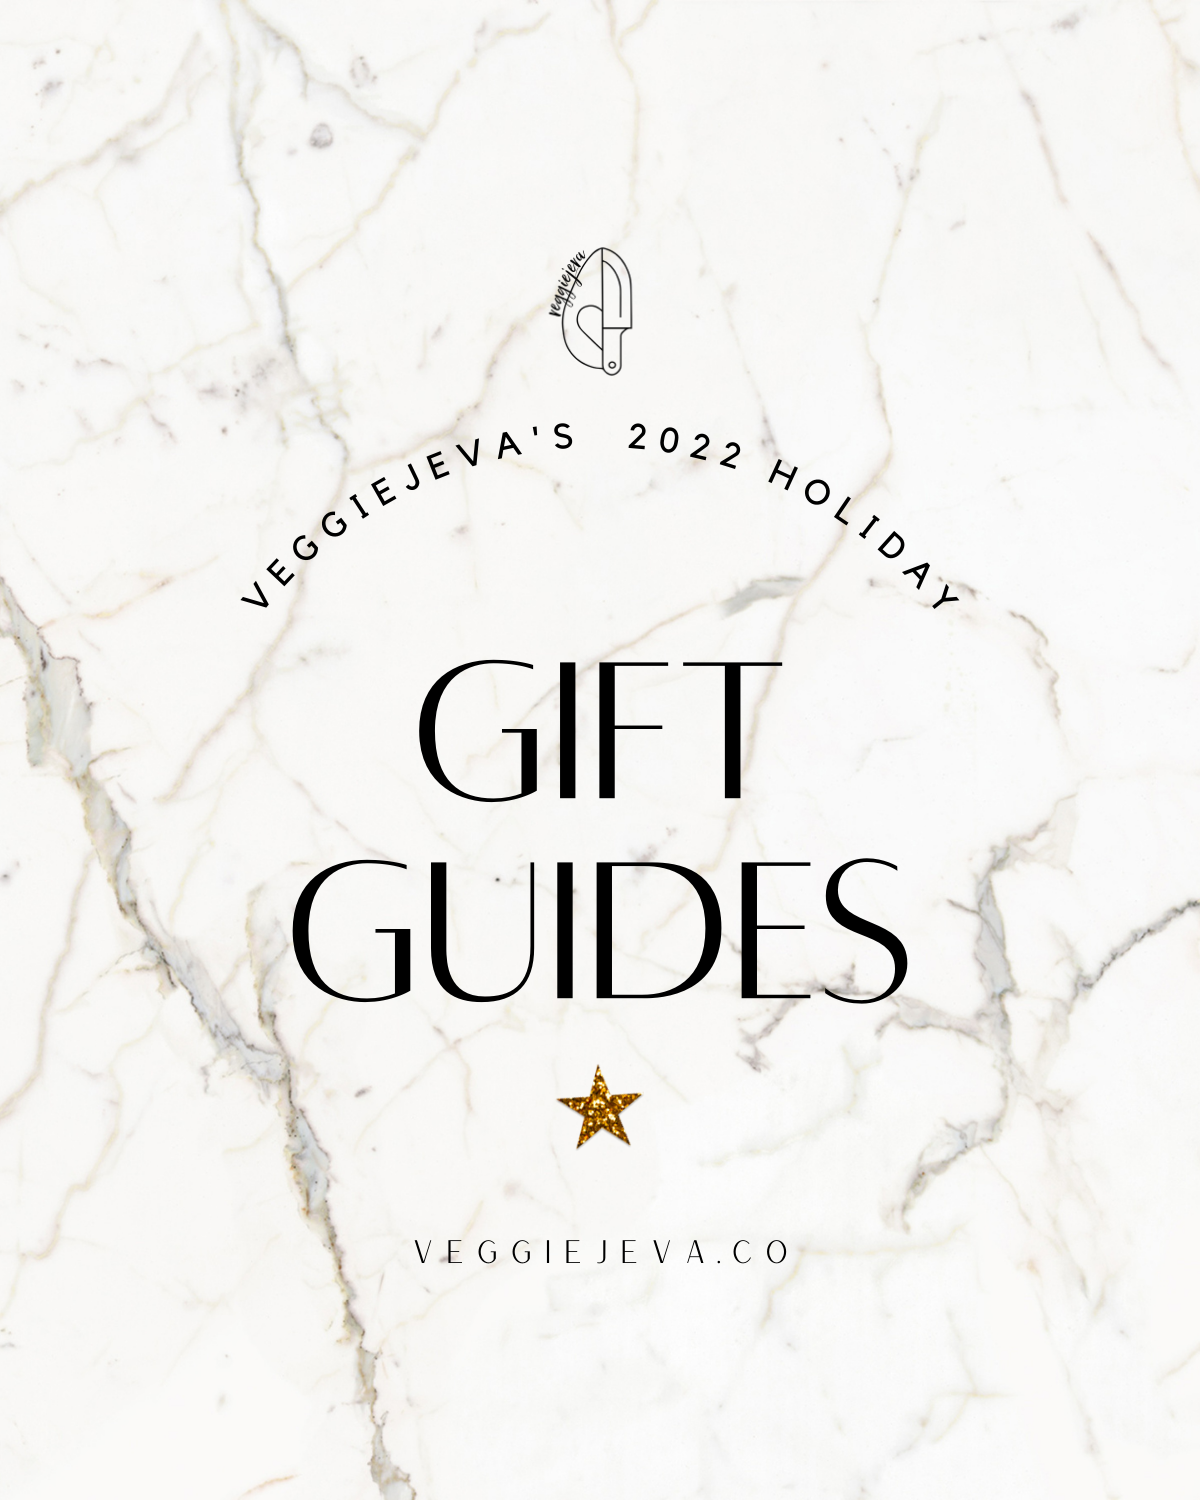 https://www.veggiejeva.co/wp-content/uploads/2022/11/VeggieJevas-2022-Gift-Guides.png